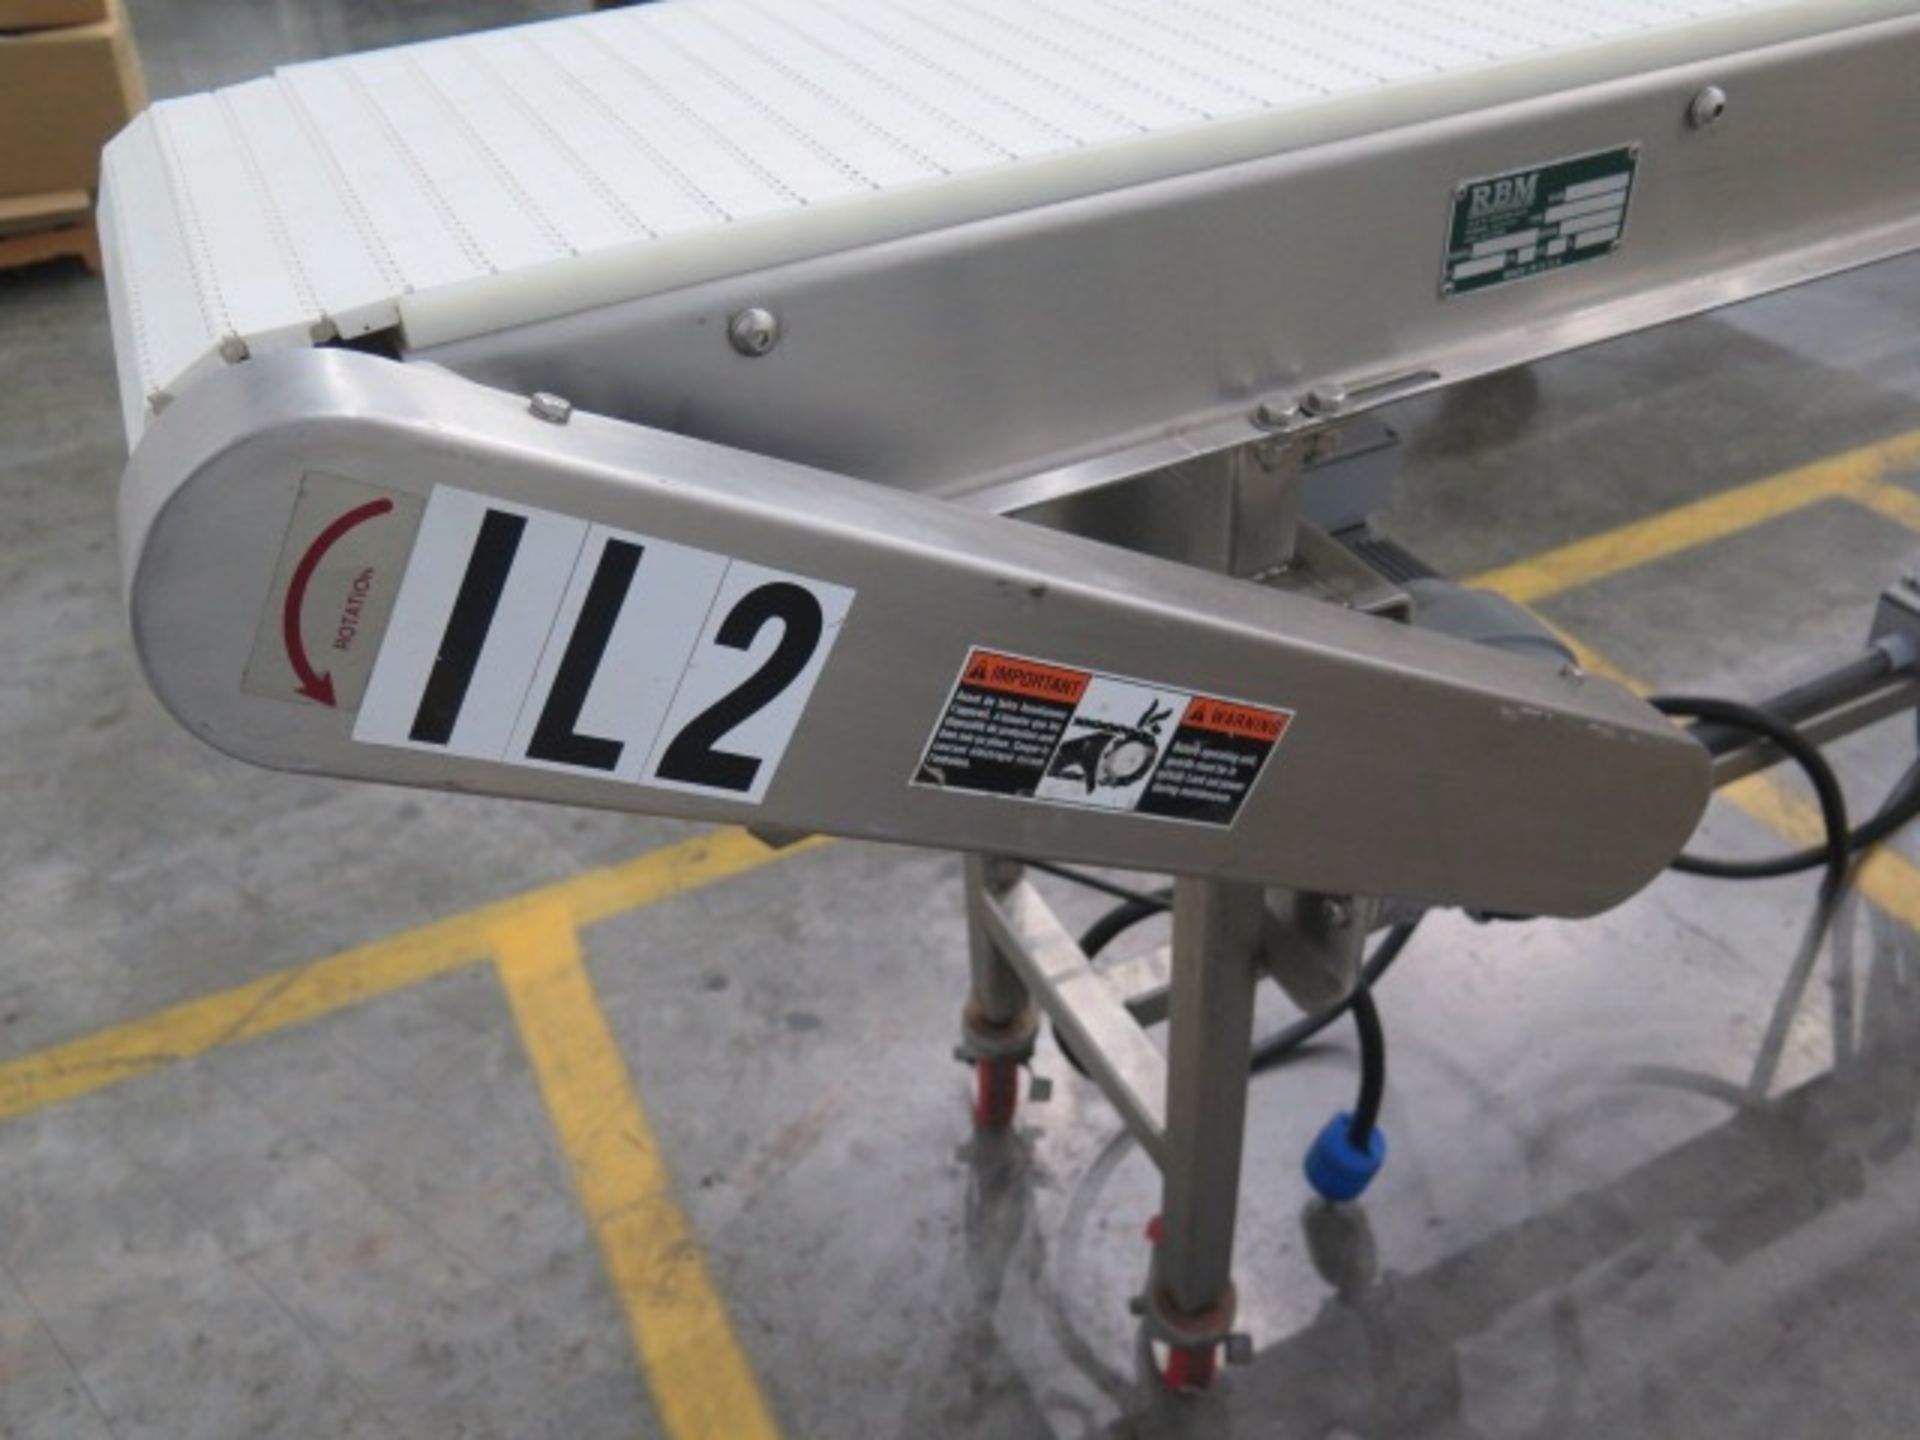 2012 RBM Model 145X13 Portable Power Belt Conveyor, S/N 2012-J125U8 with Casters | Rig Fee: $150 - Image 8 of 11